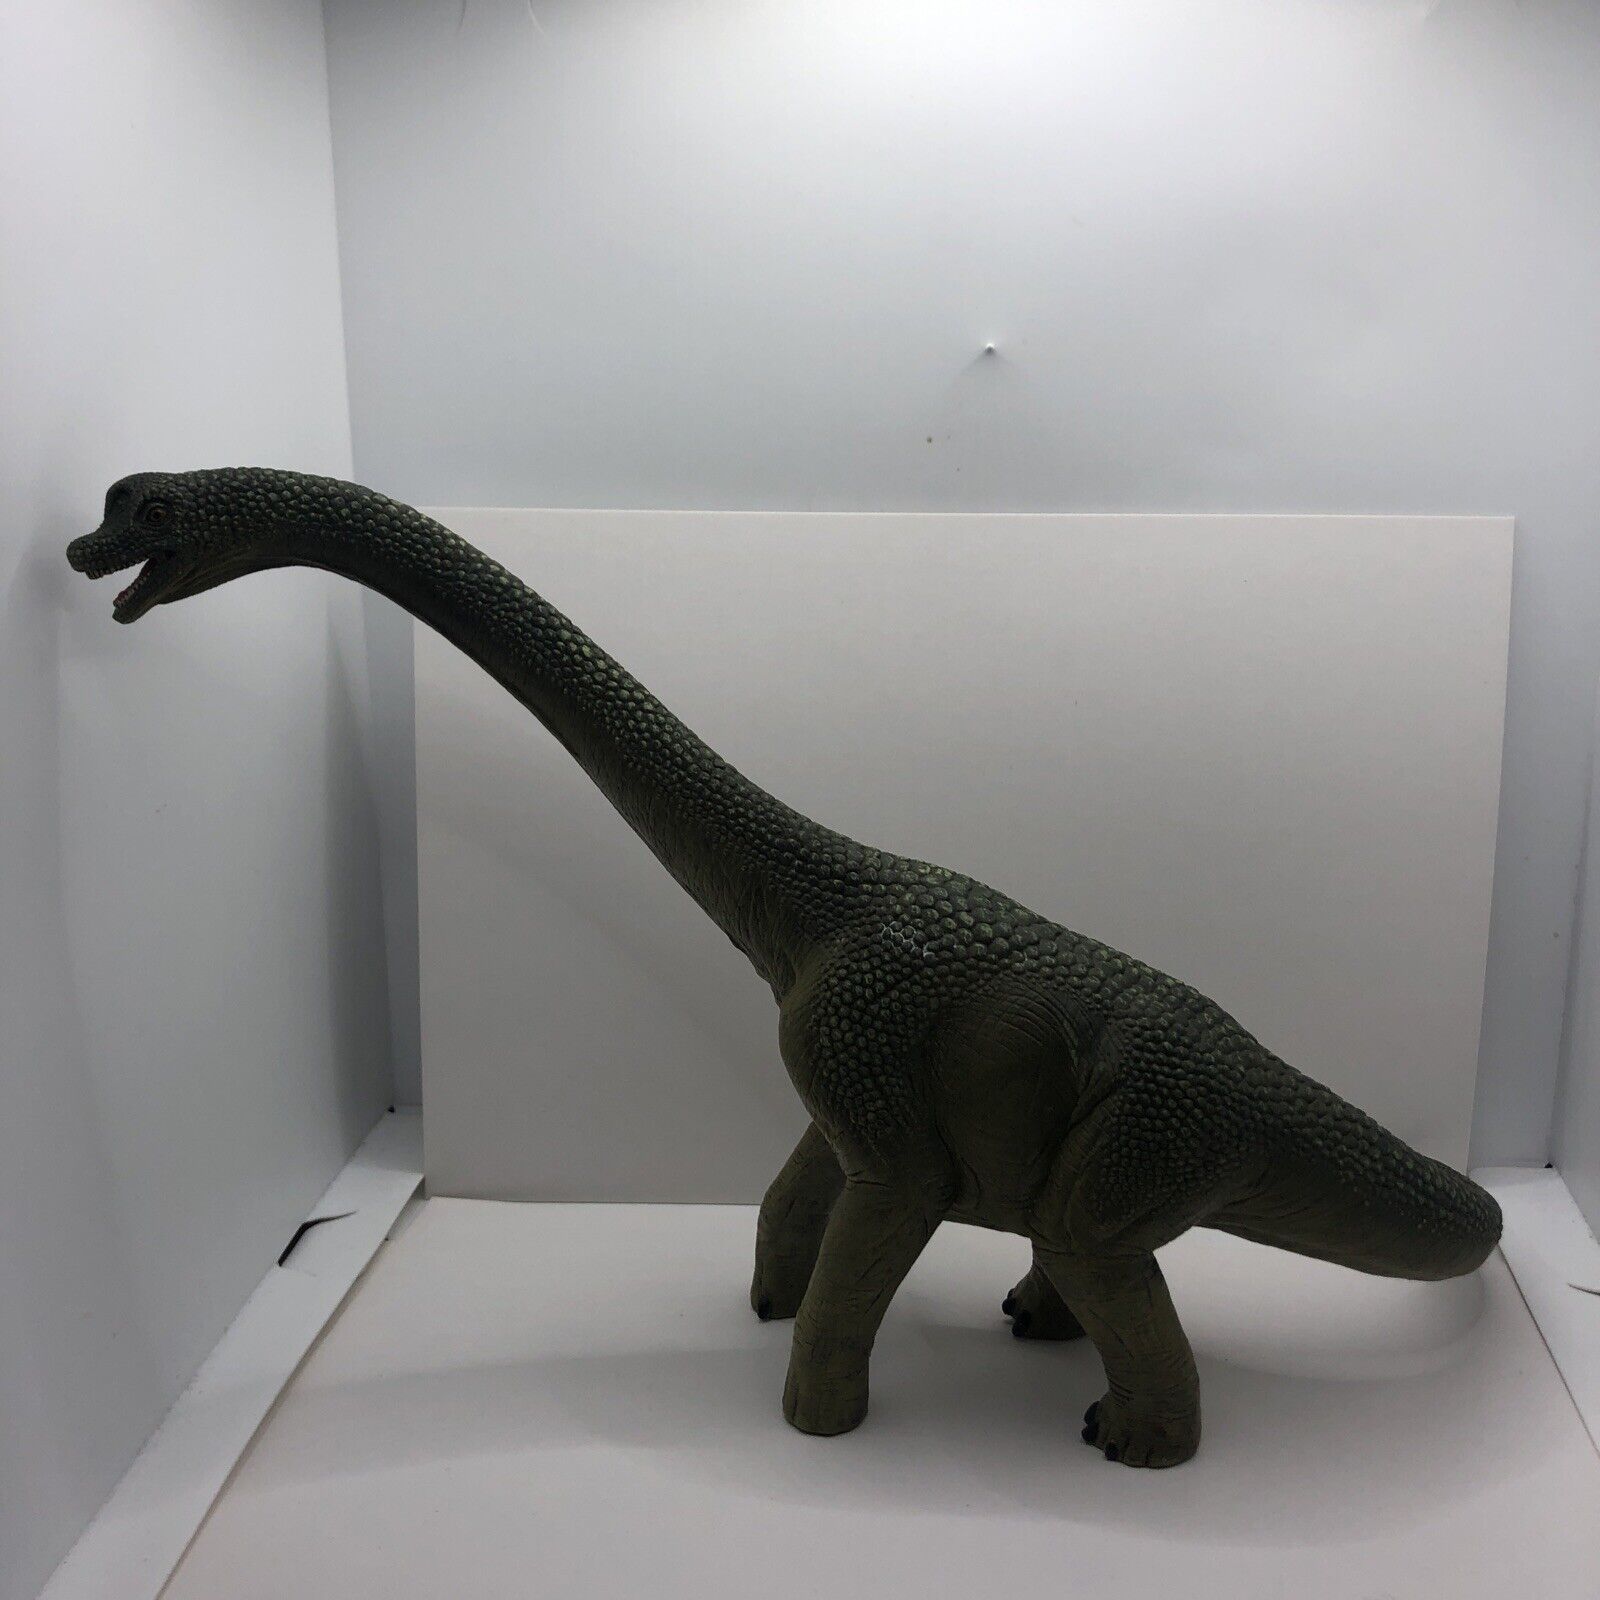 14581 Schleich Brachiosaurus - Toy Dinosaur Figure Long neck 13” Long 7.5” Tall